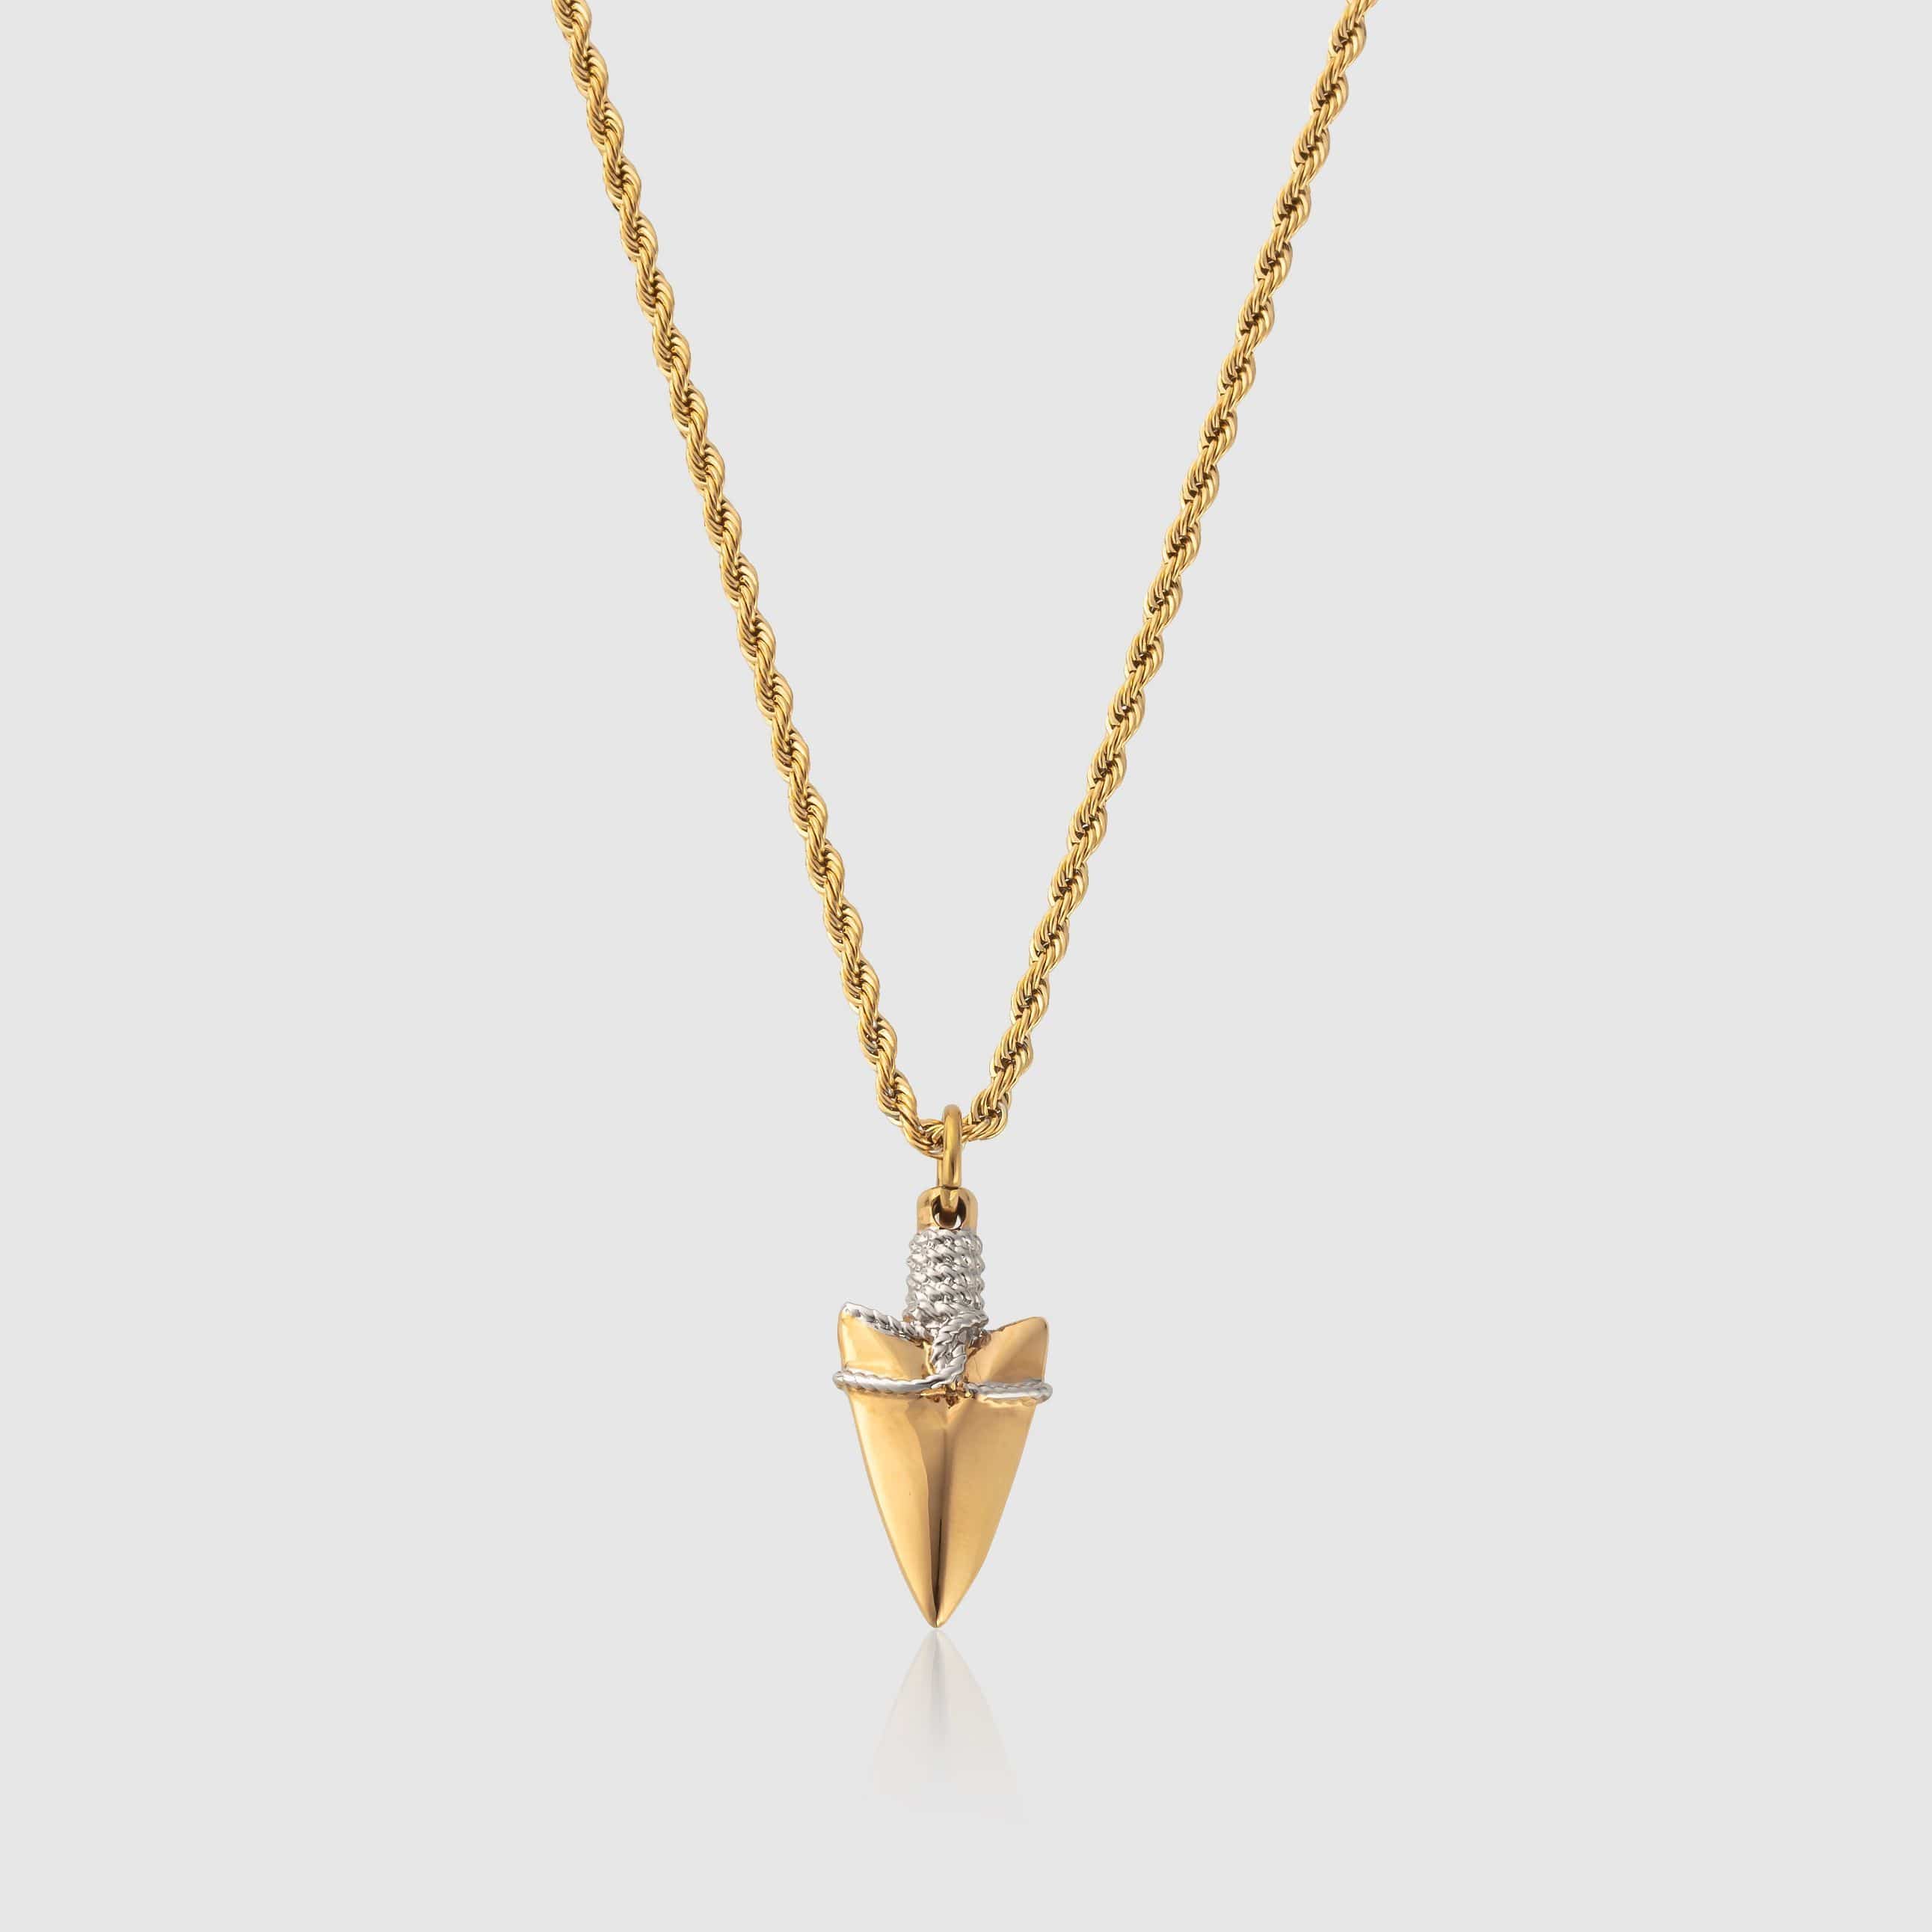 Gold Arrow Necklace For Men